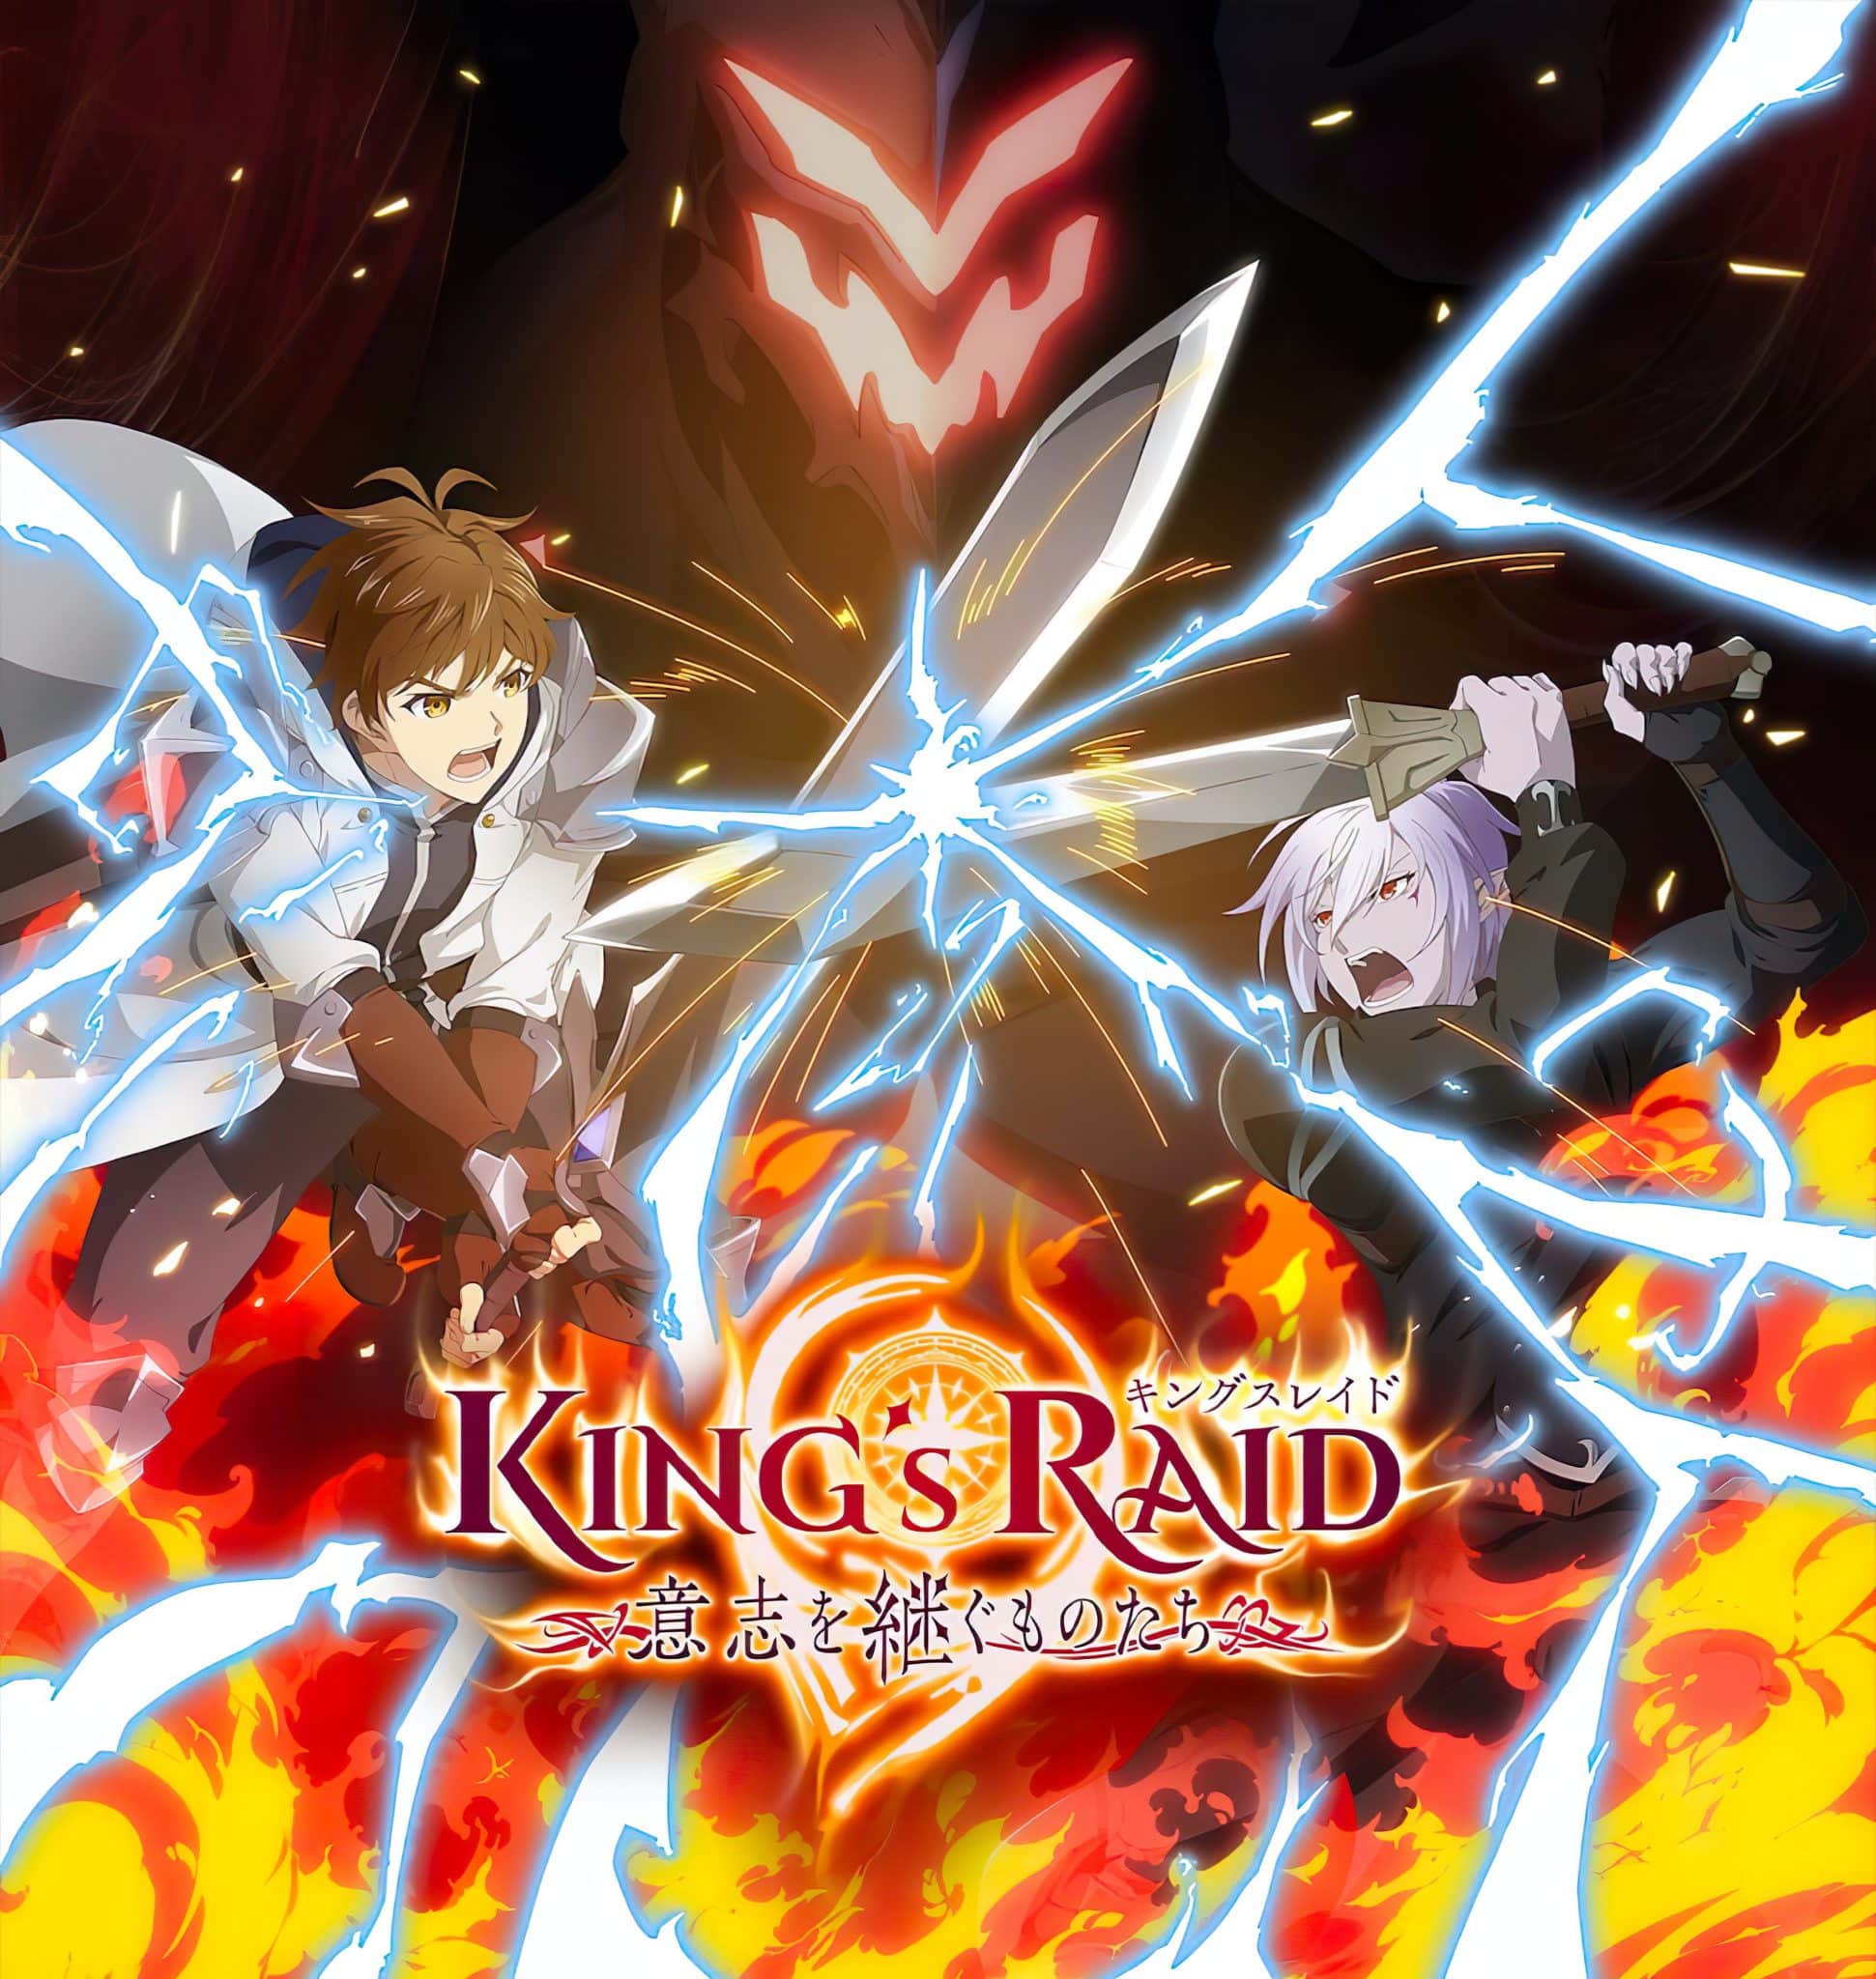 Annonce du cast pour l'anime King's Raid : Successors of the Will